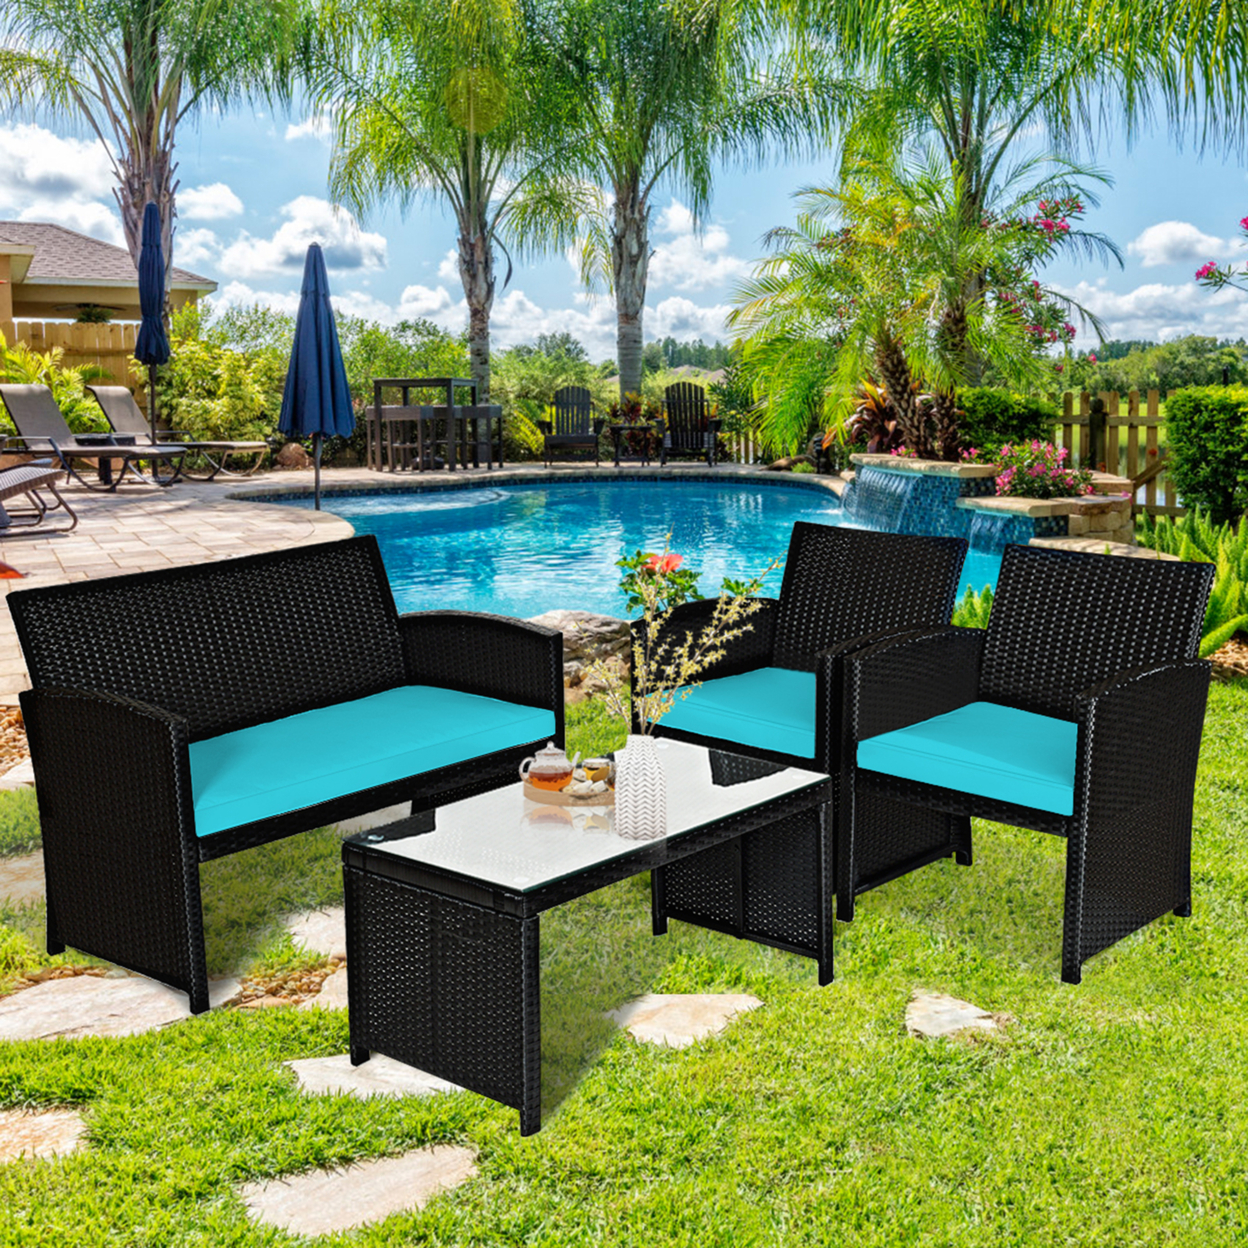 4PCS Rattan Outdoor Conversation Set Patio Furniture Set W/ Turquoise Cushions